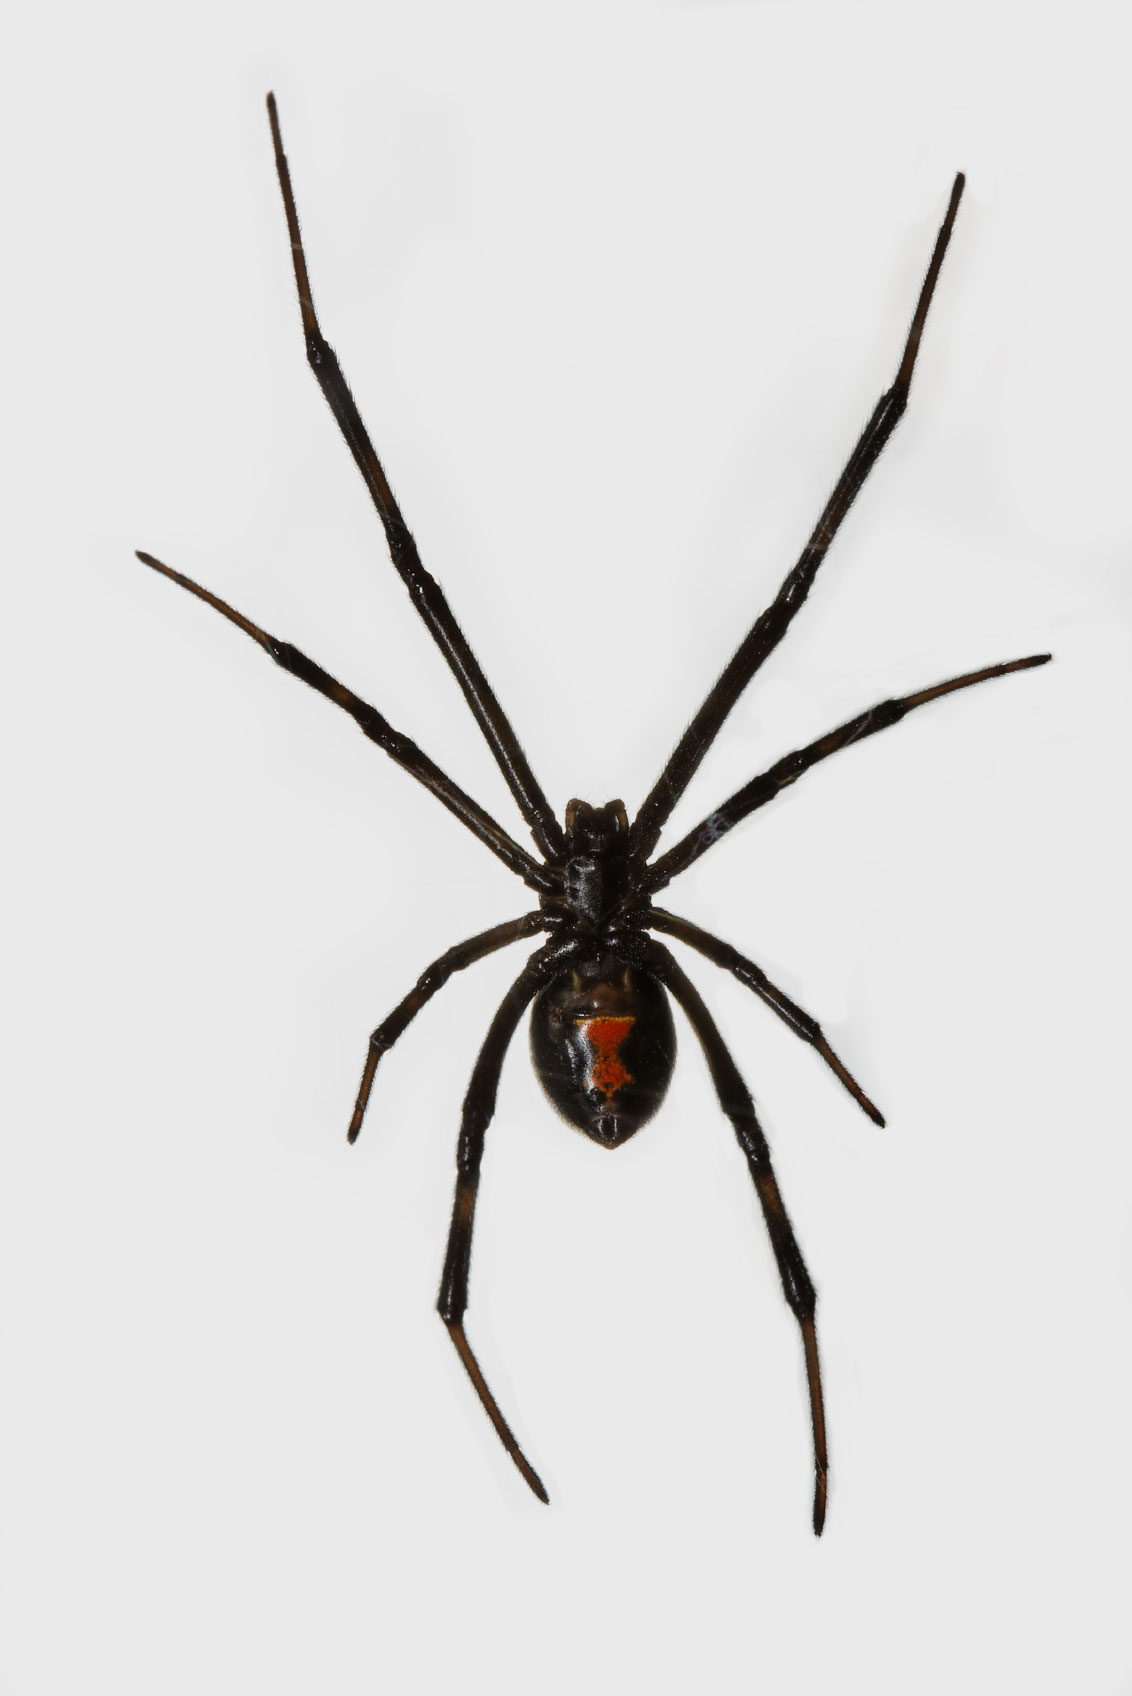 Calgary Spider Pest Control &amp; Exterminator Services